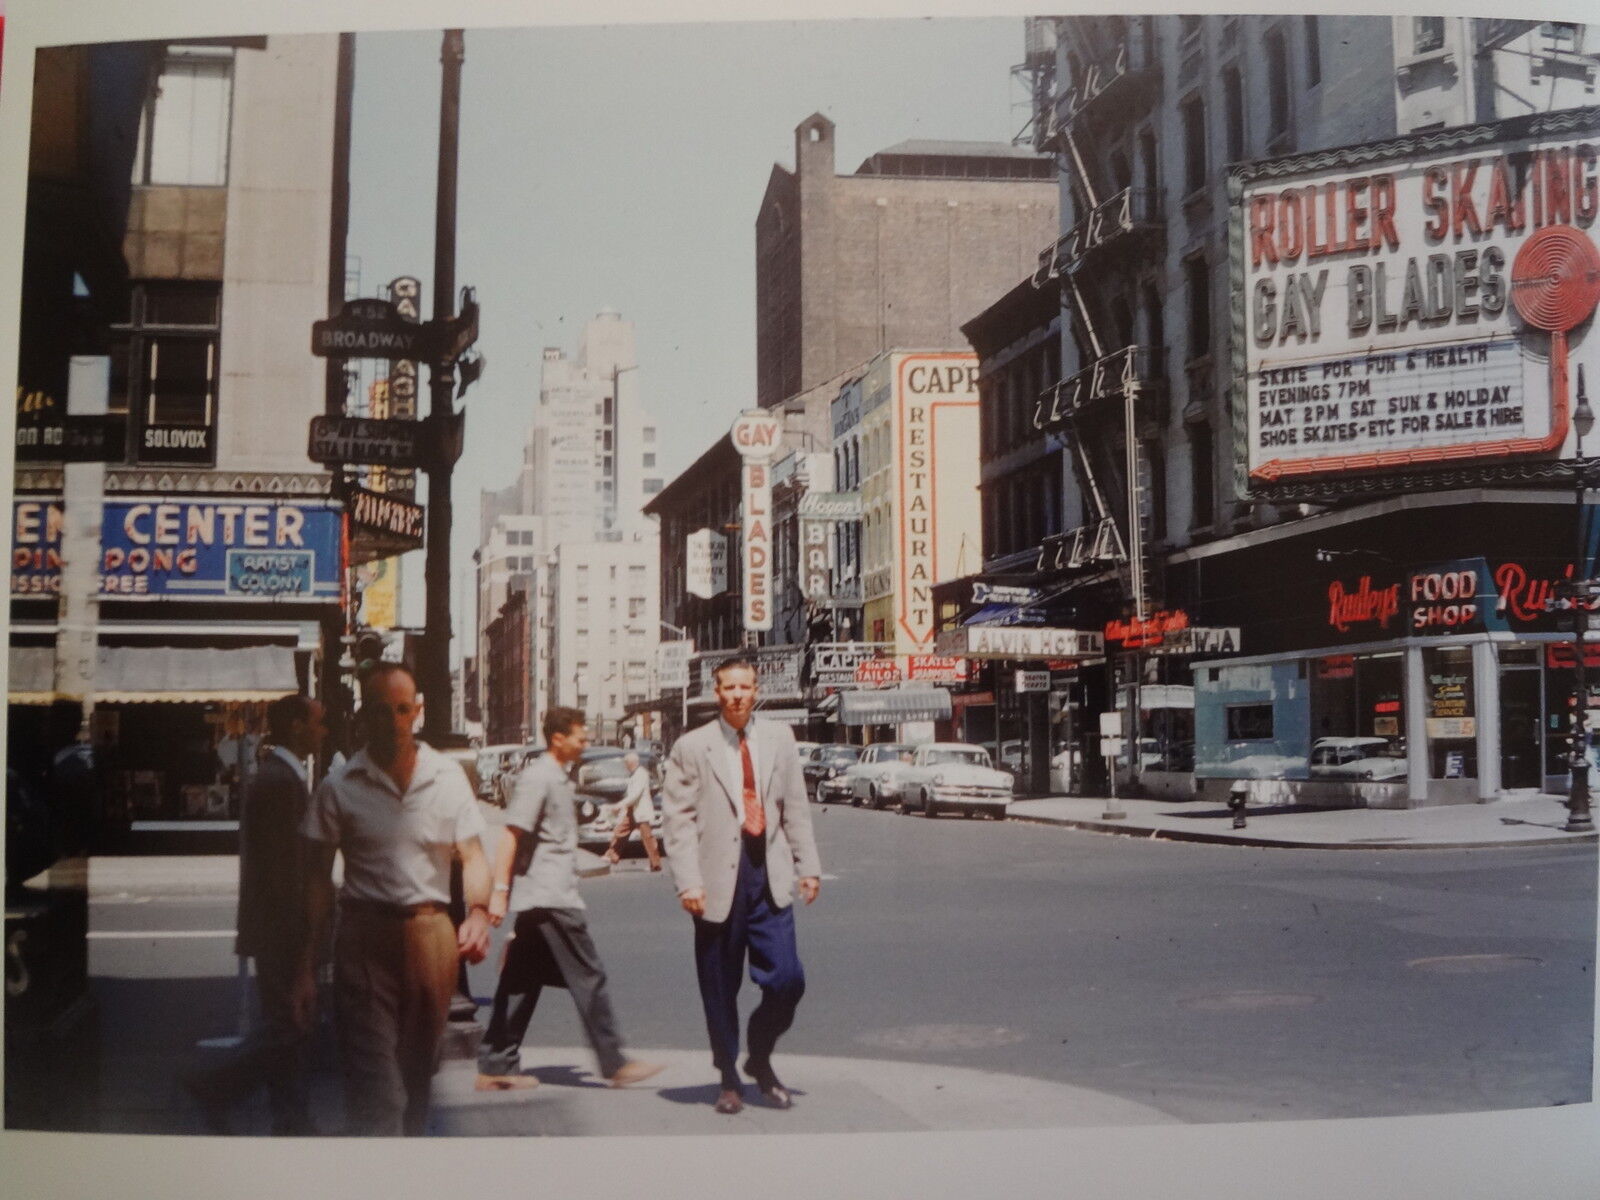 1953 Broadway & 52 St Gay Blades Neon Manhattan NYC New York City Photo